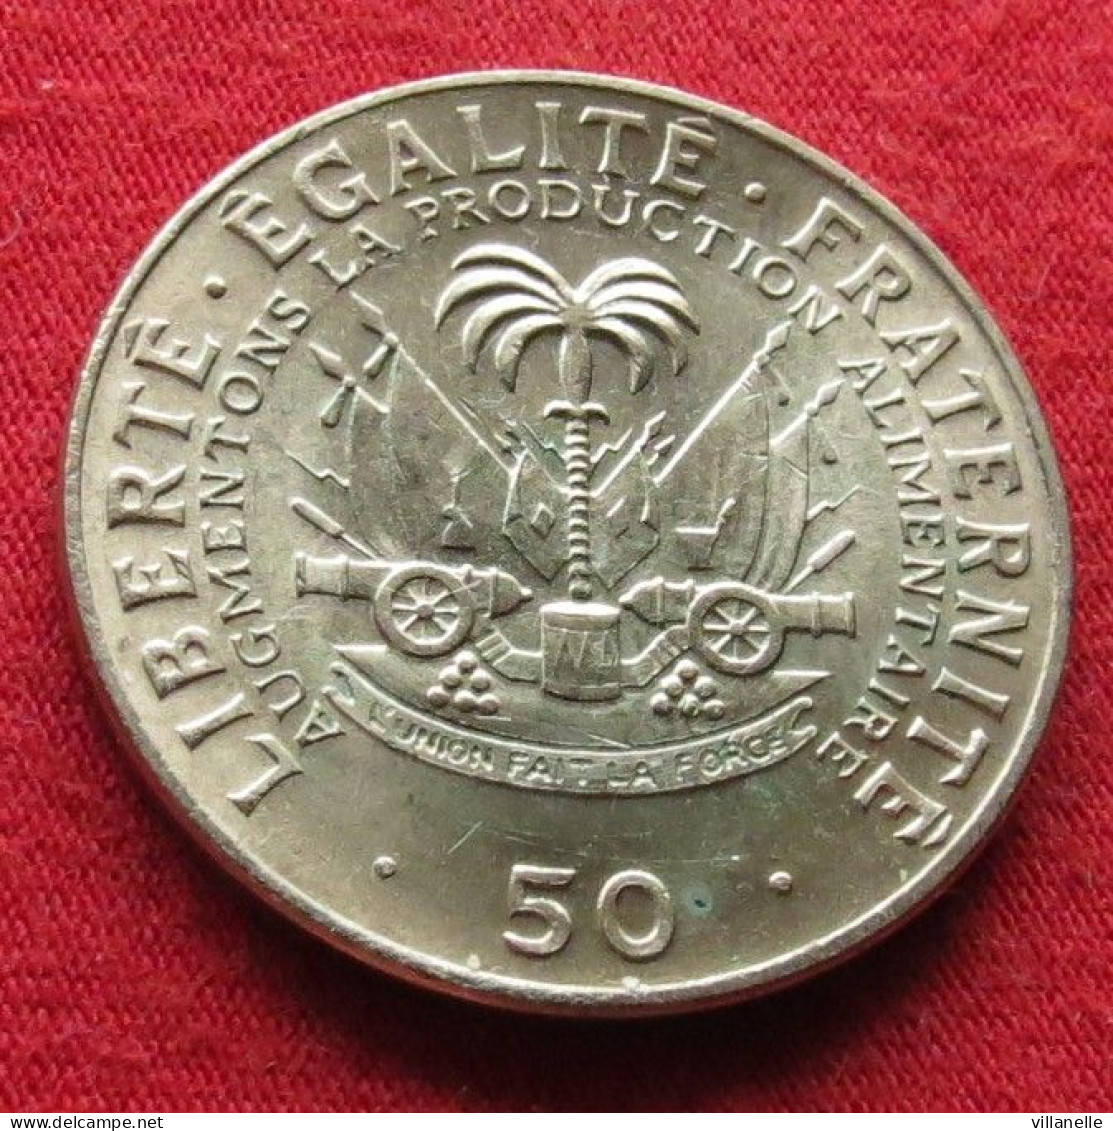 Haiti 50 Centimes 1972 FAO F.a.o. UNC ºº - Haiti